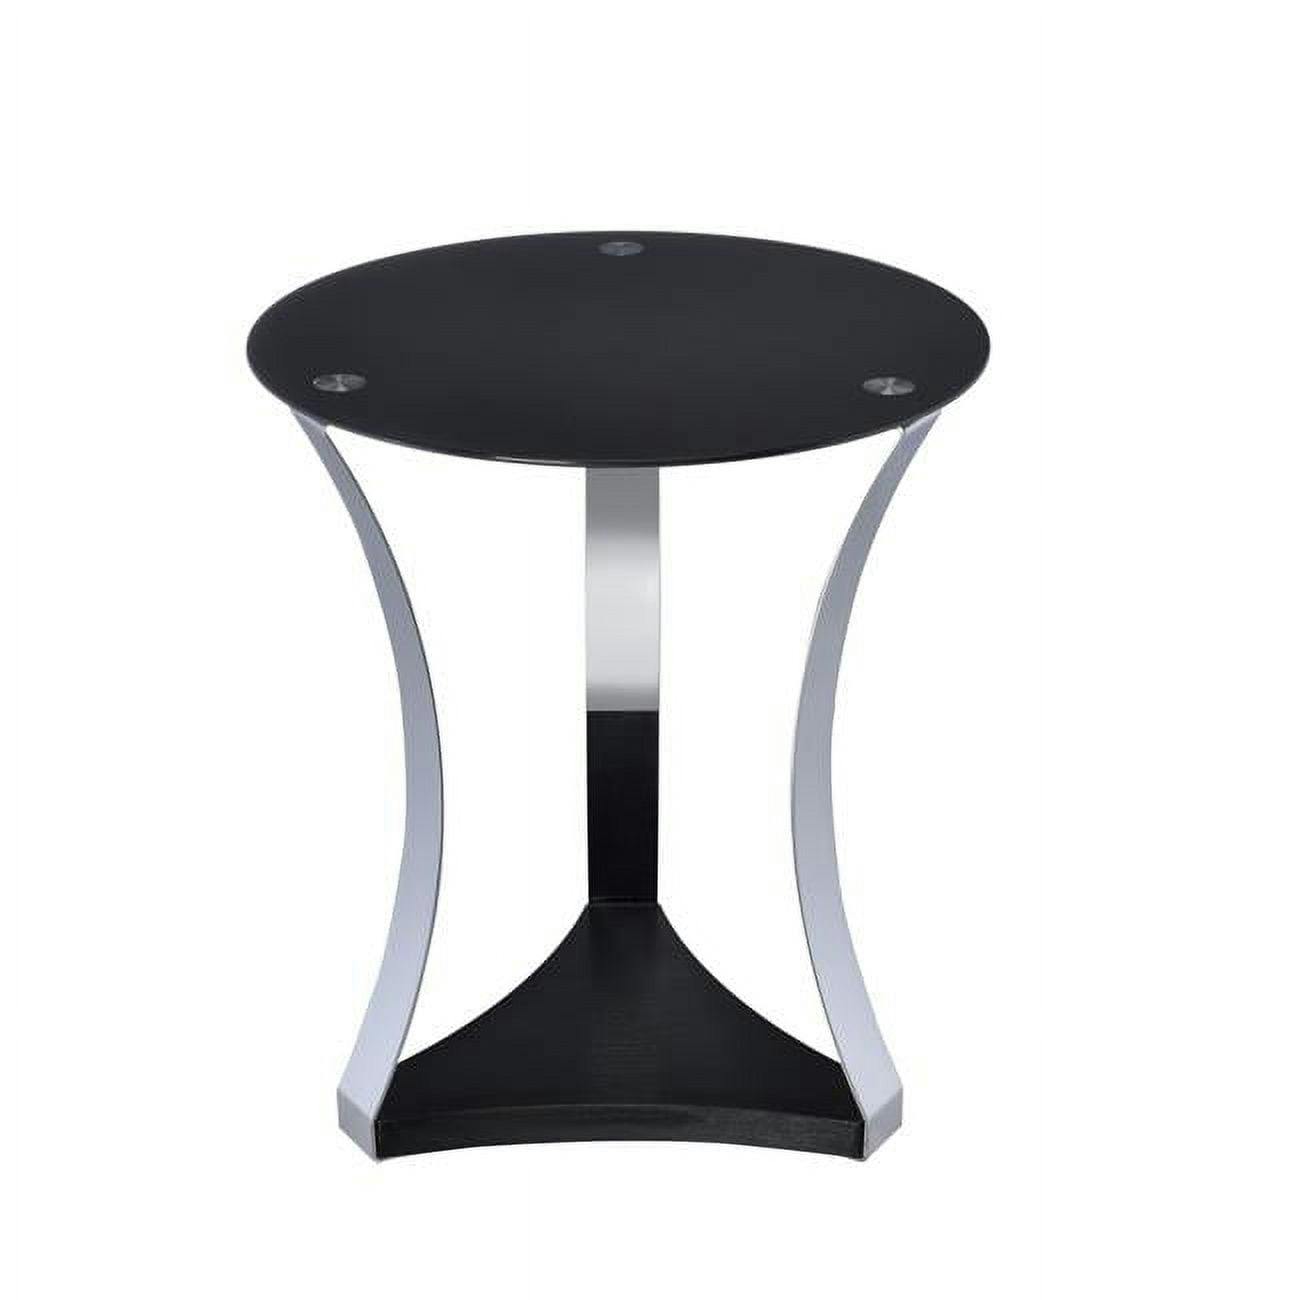 20" Chrome & Black Glass Round Pedestal End Table with Shelf